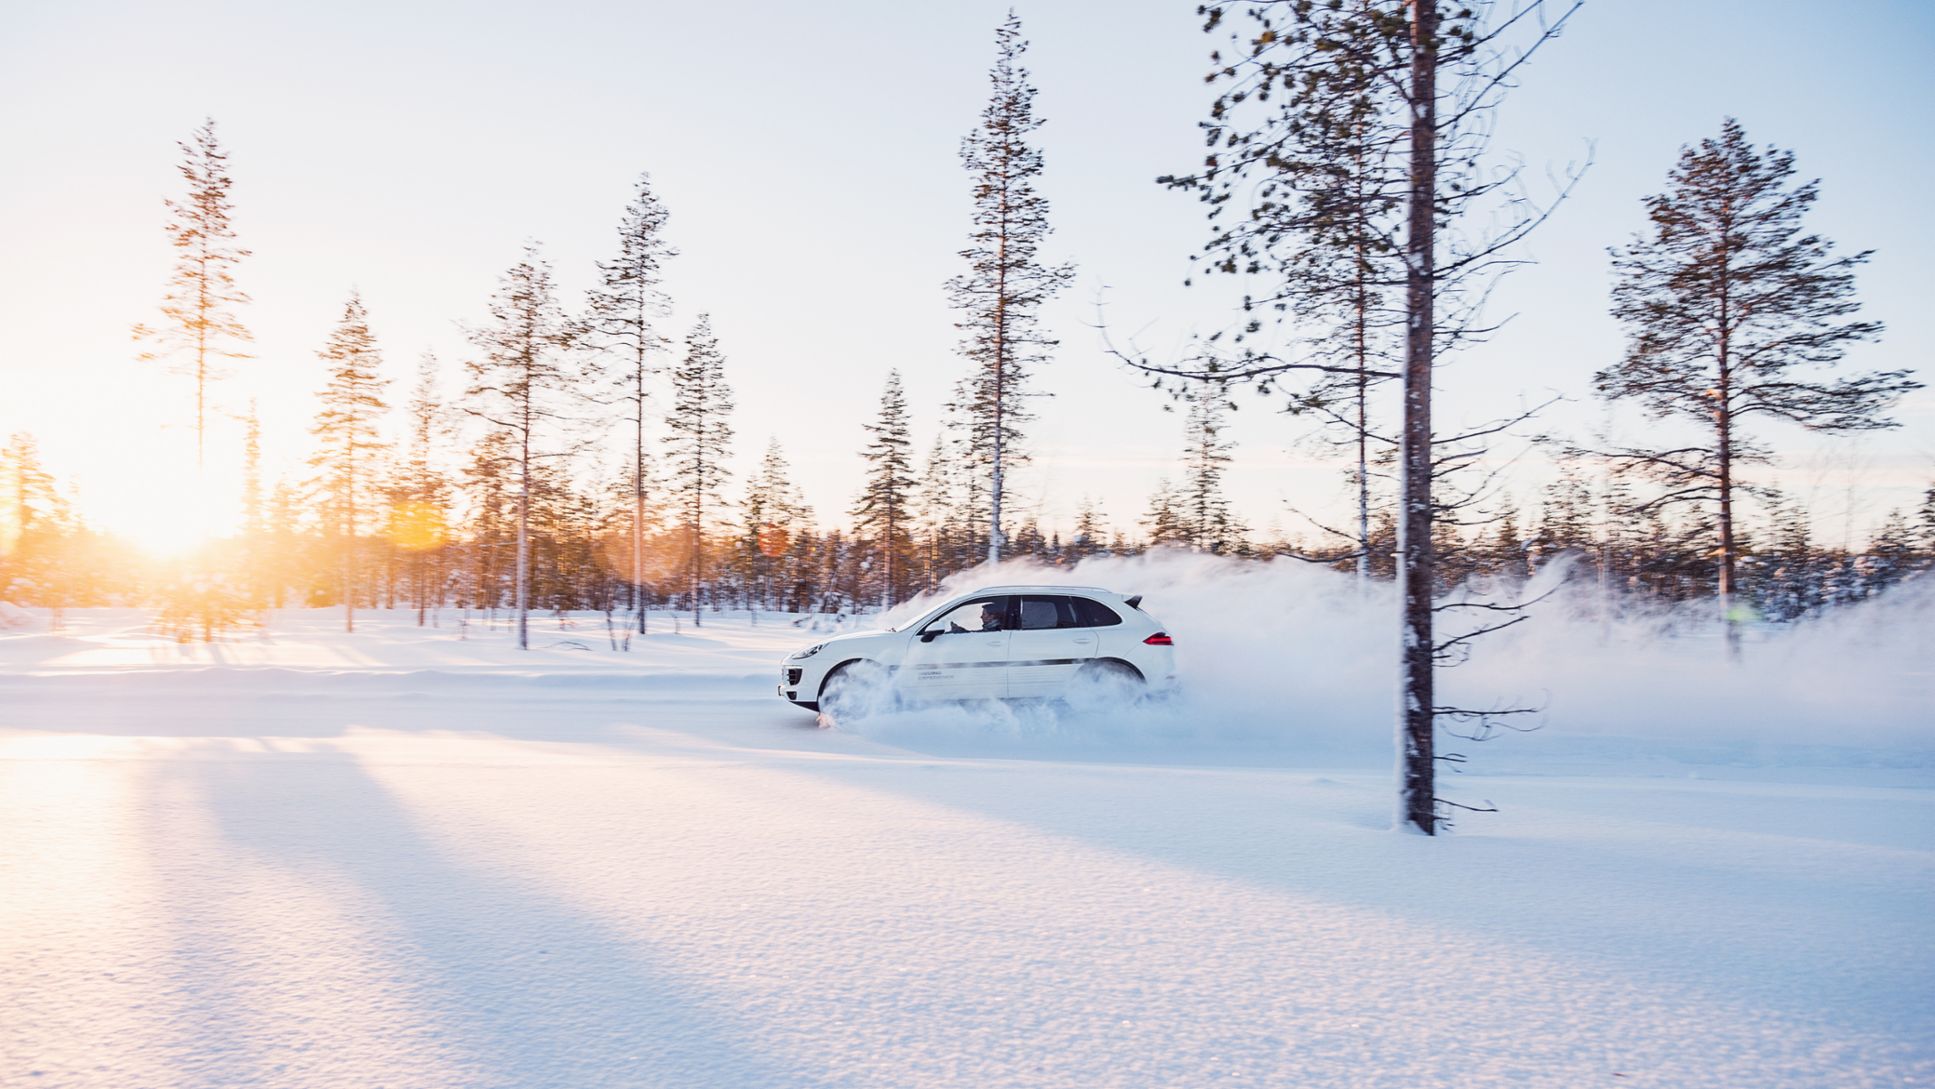 Cayenne S, Porsche Driving Experience Winter, Levi, Finland, 2015, Porsche AG